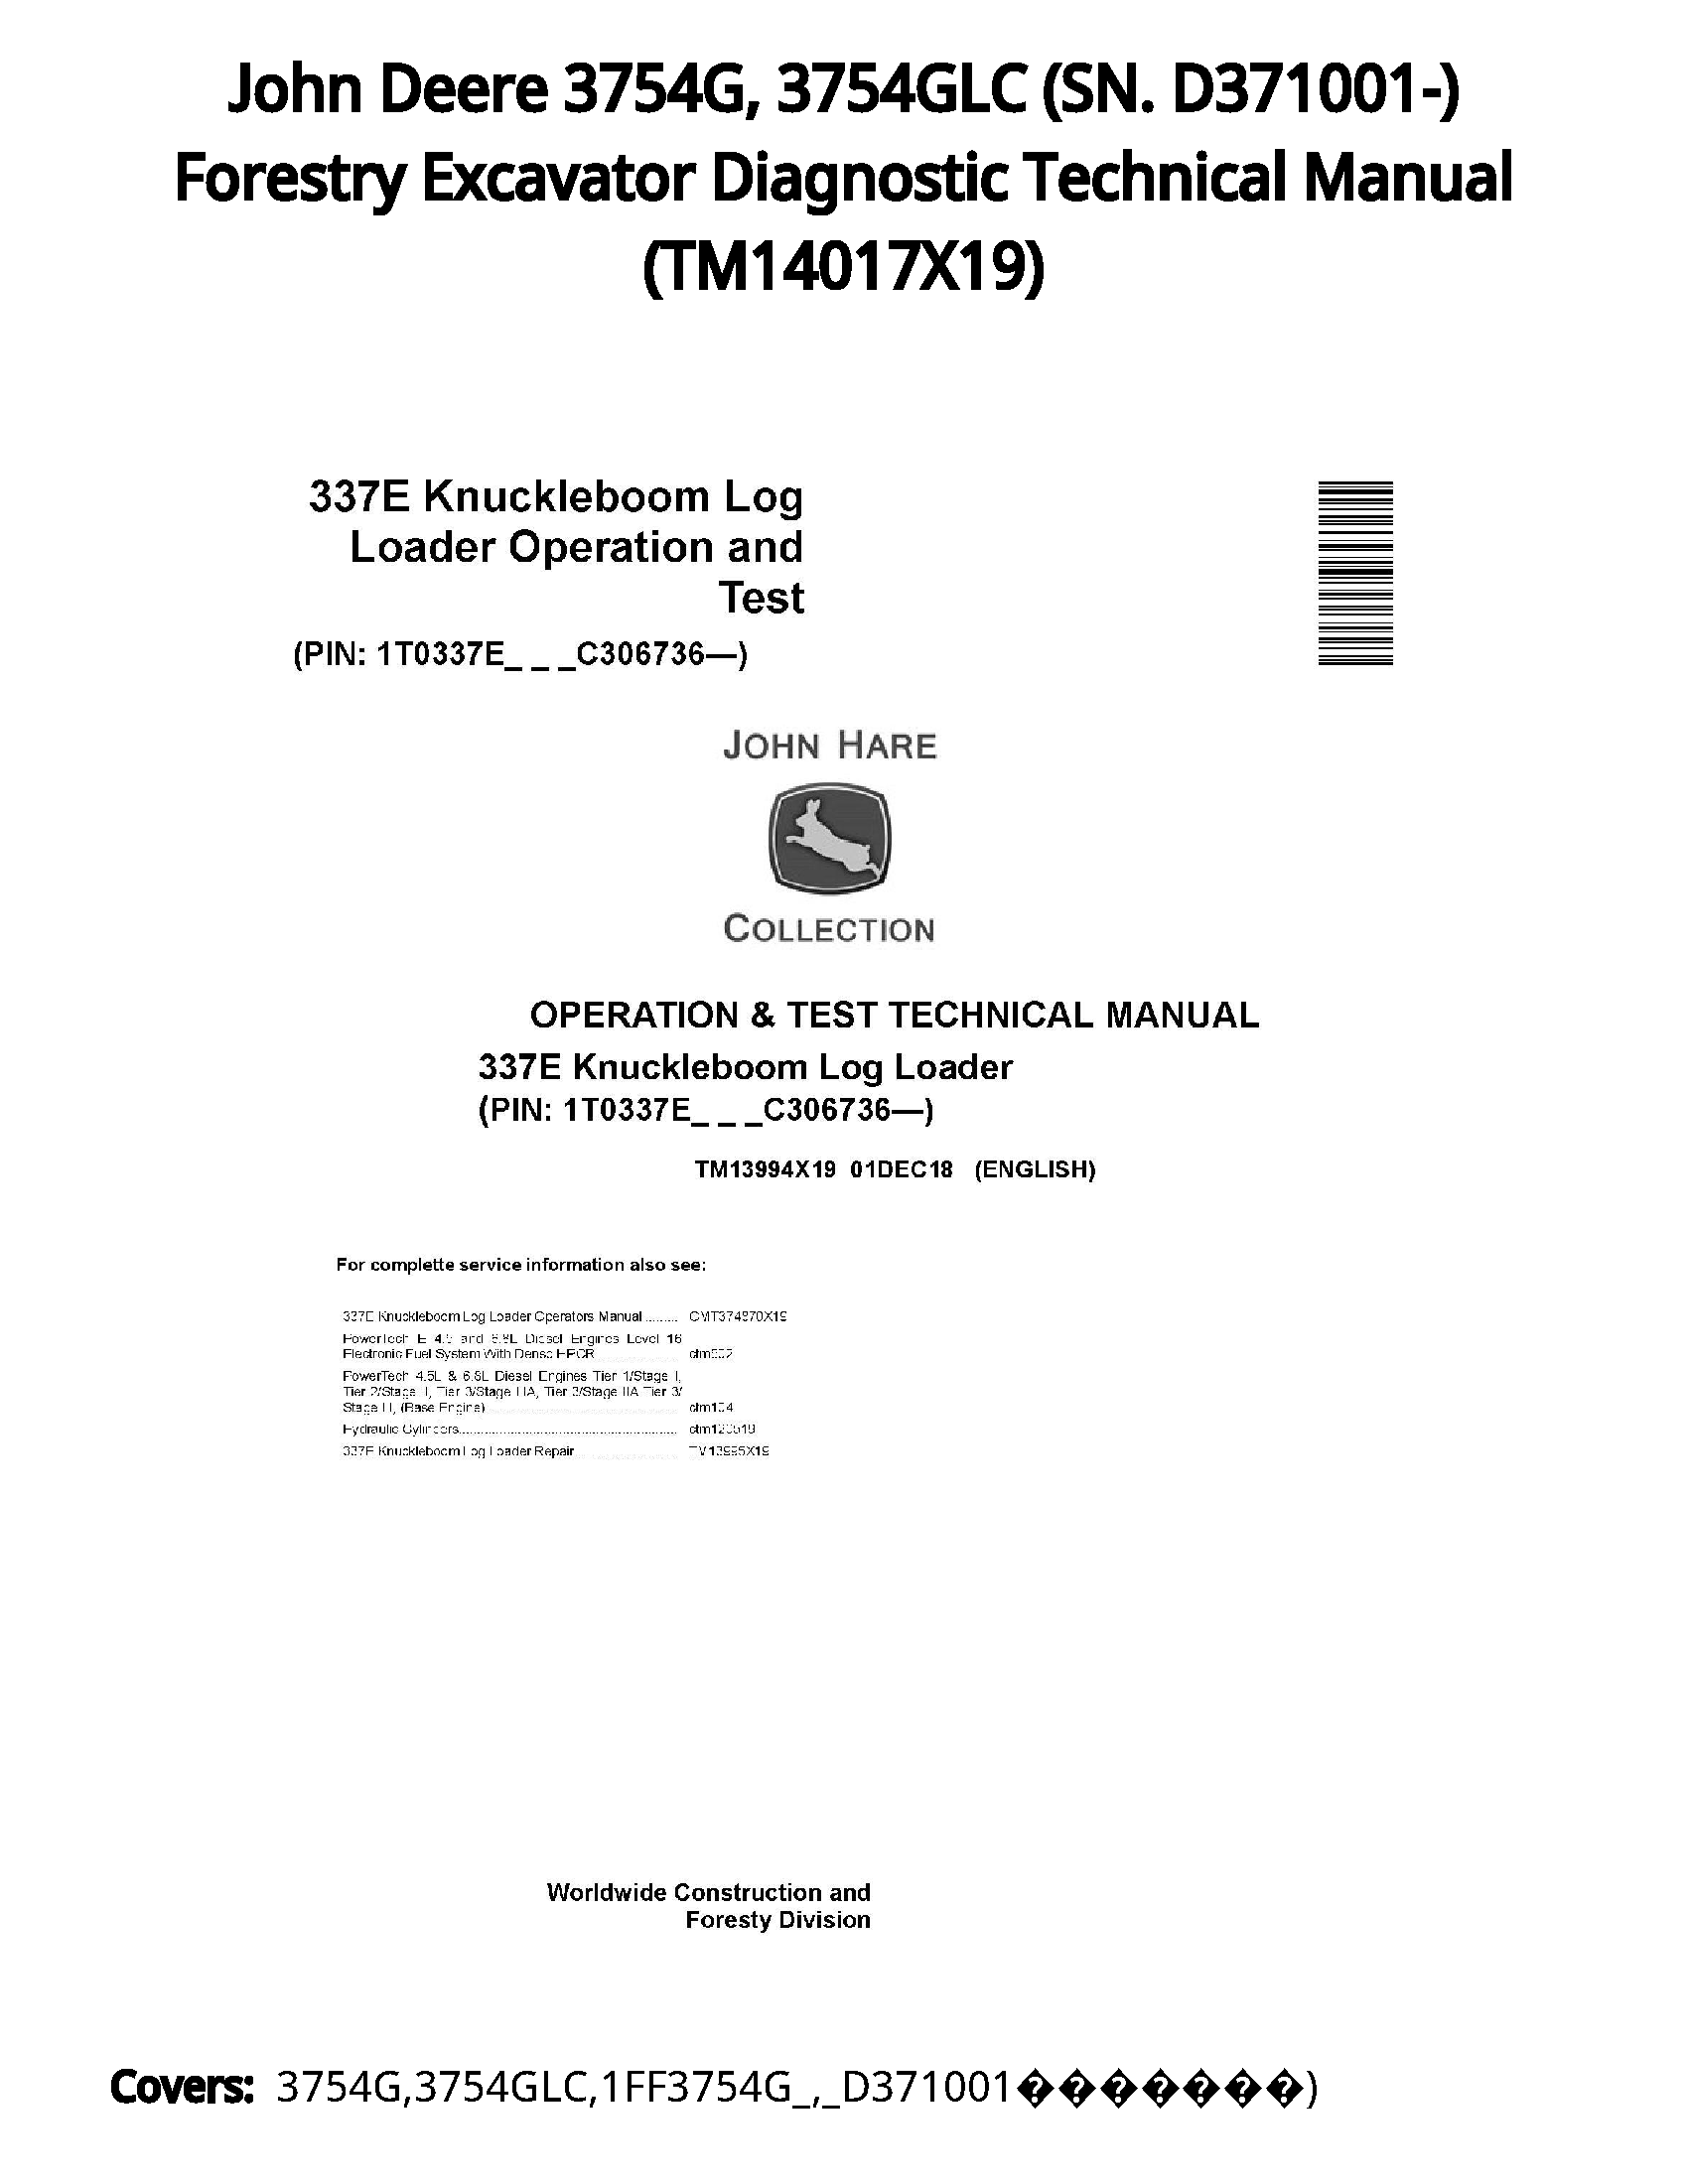 John Deere 3754G  3754GLC (SN. D371001-) Forestry Excavator Diagnostic Technical Manual - TM14017X19